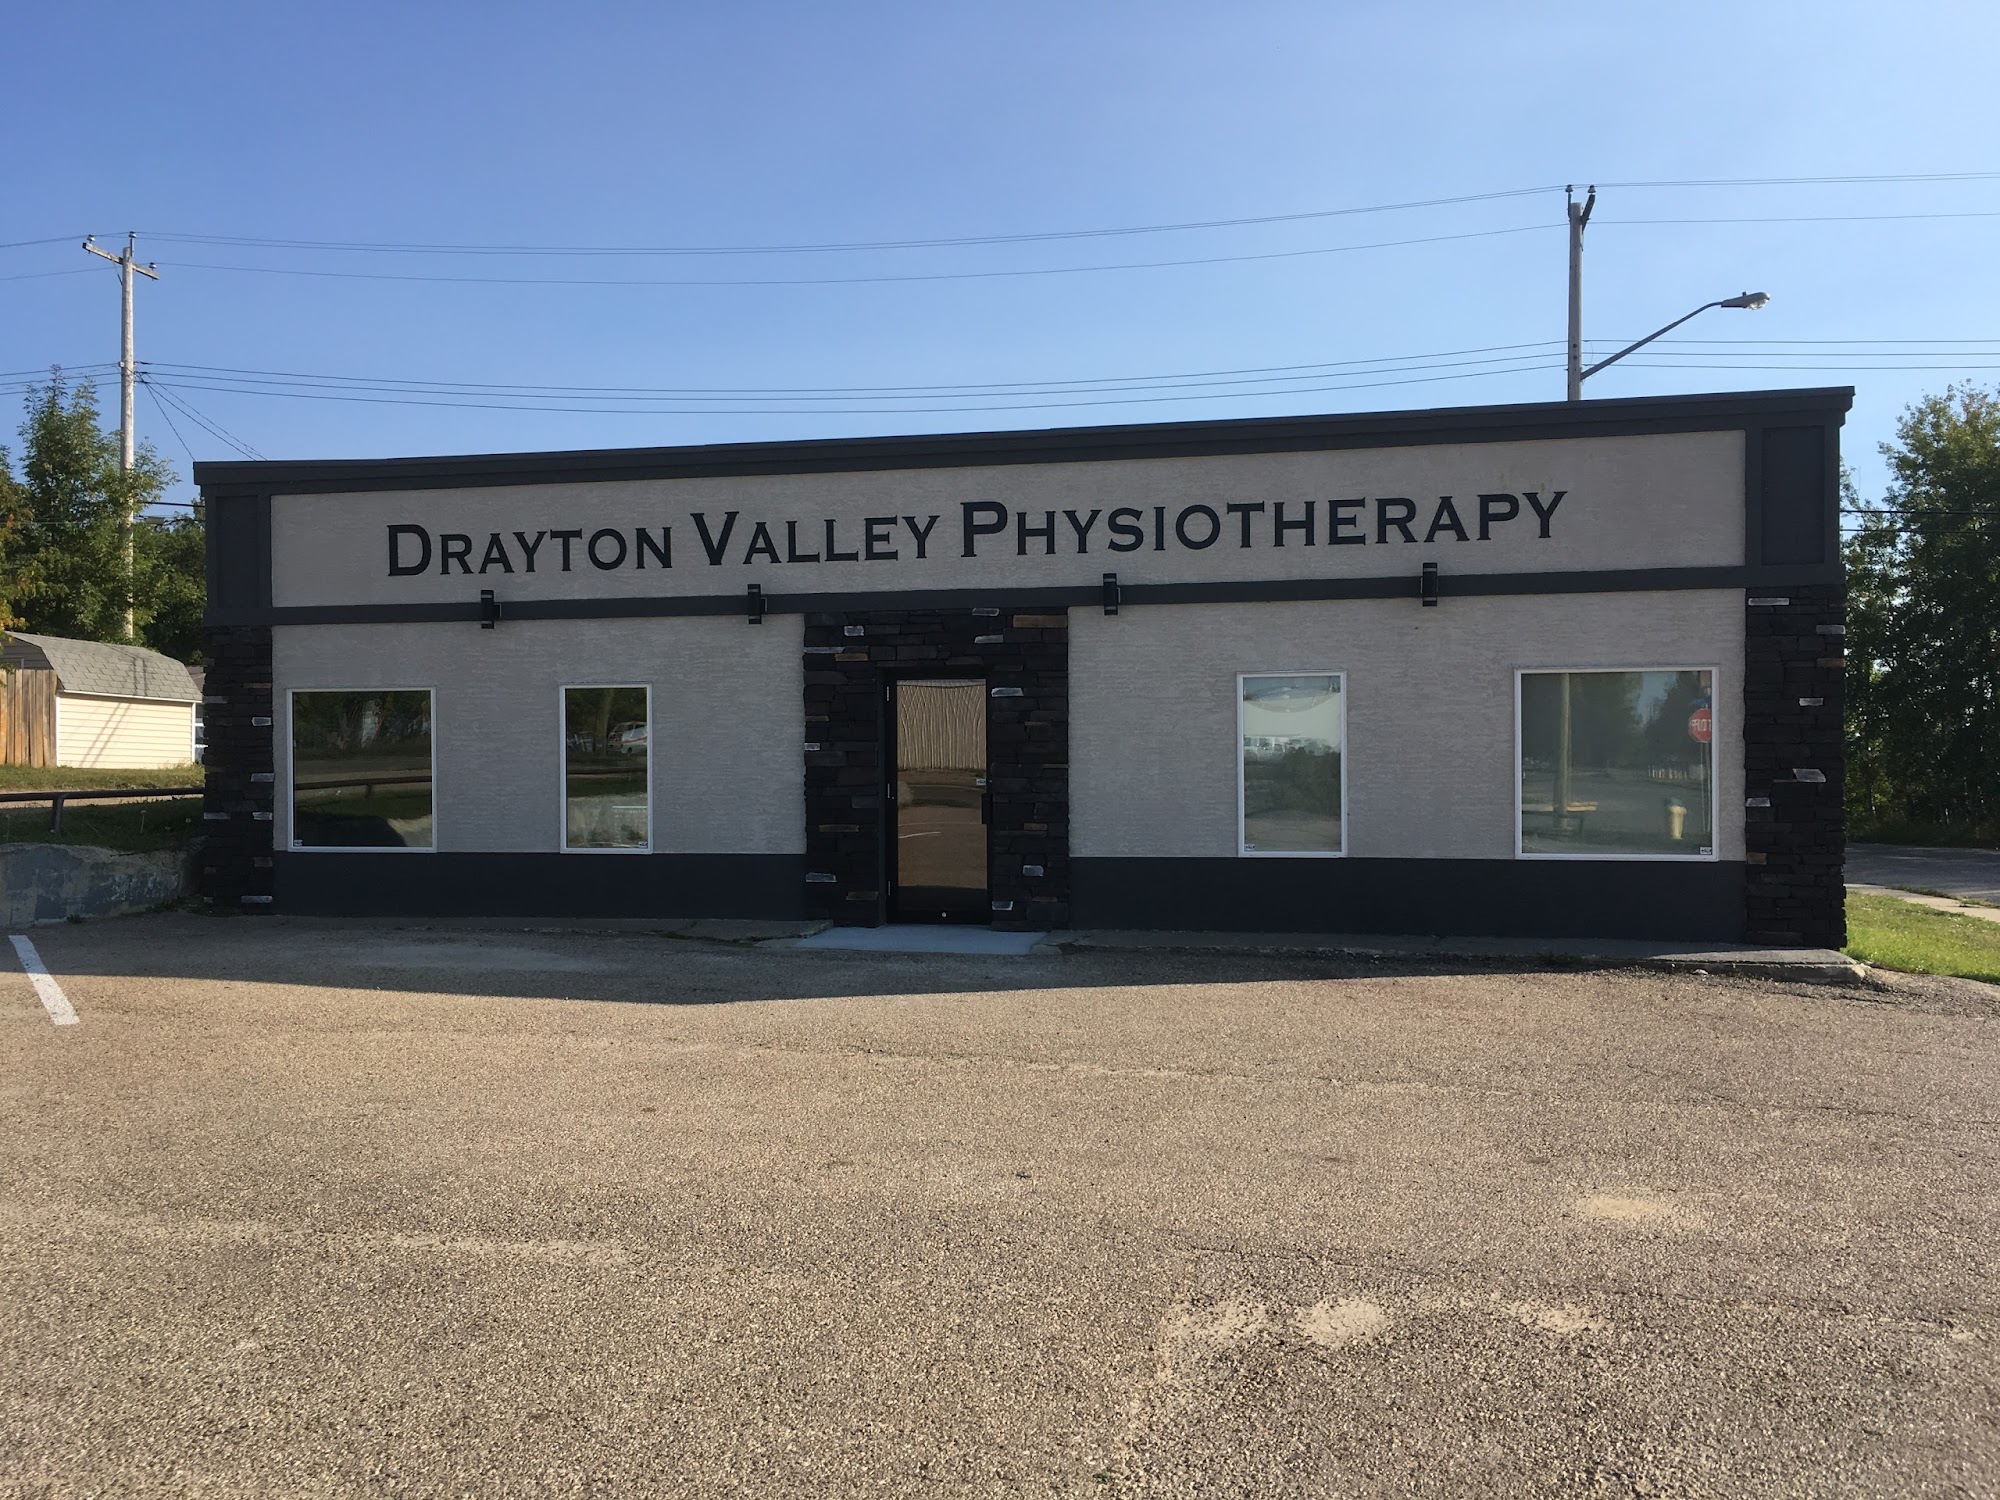 Drayton Valley Physiotherapy Clinic 5179 50 Ave, Drayton Valley Alberta T7A 1J7